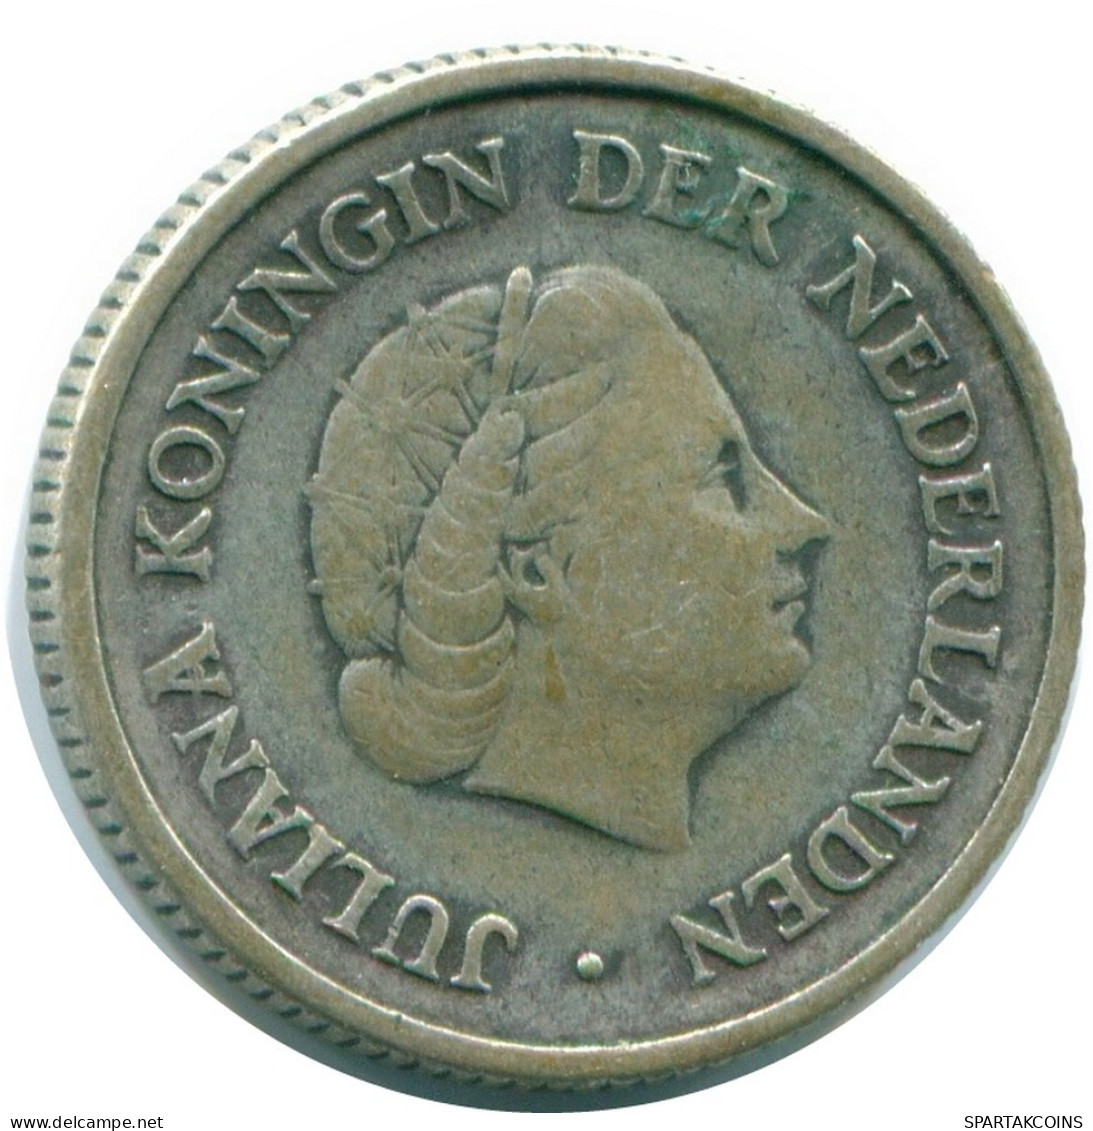 1/4 GULDEN 1954 NETHERLANDS ANTILLES SILVER Colonial Coin #NL10882.4.U.A - Antilles Néerlandaises